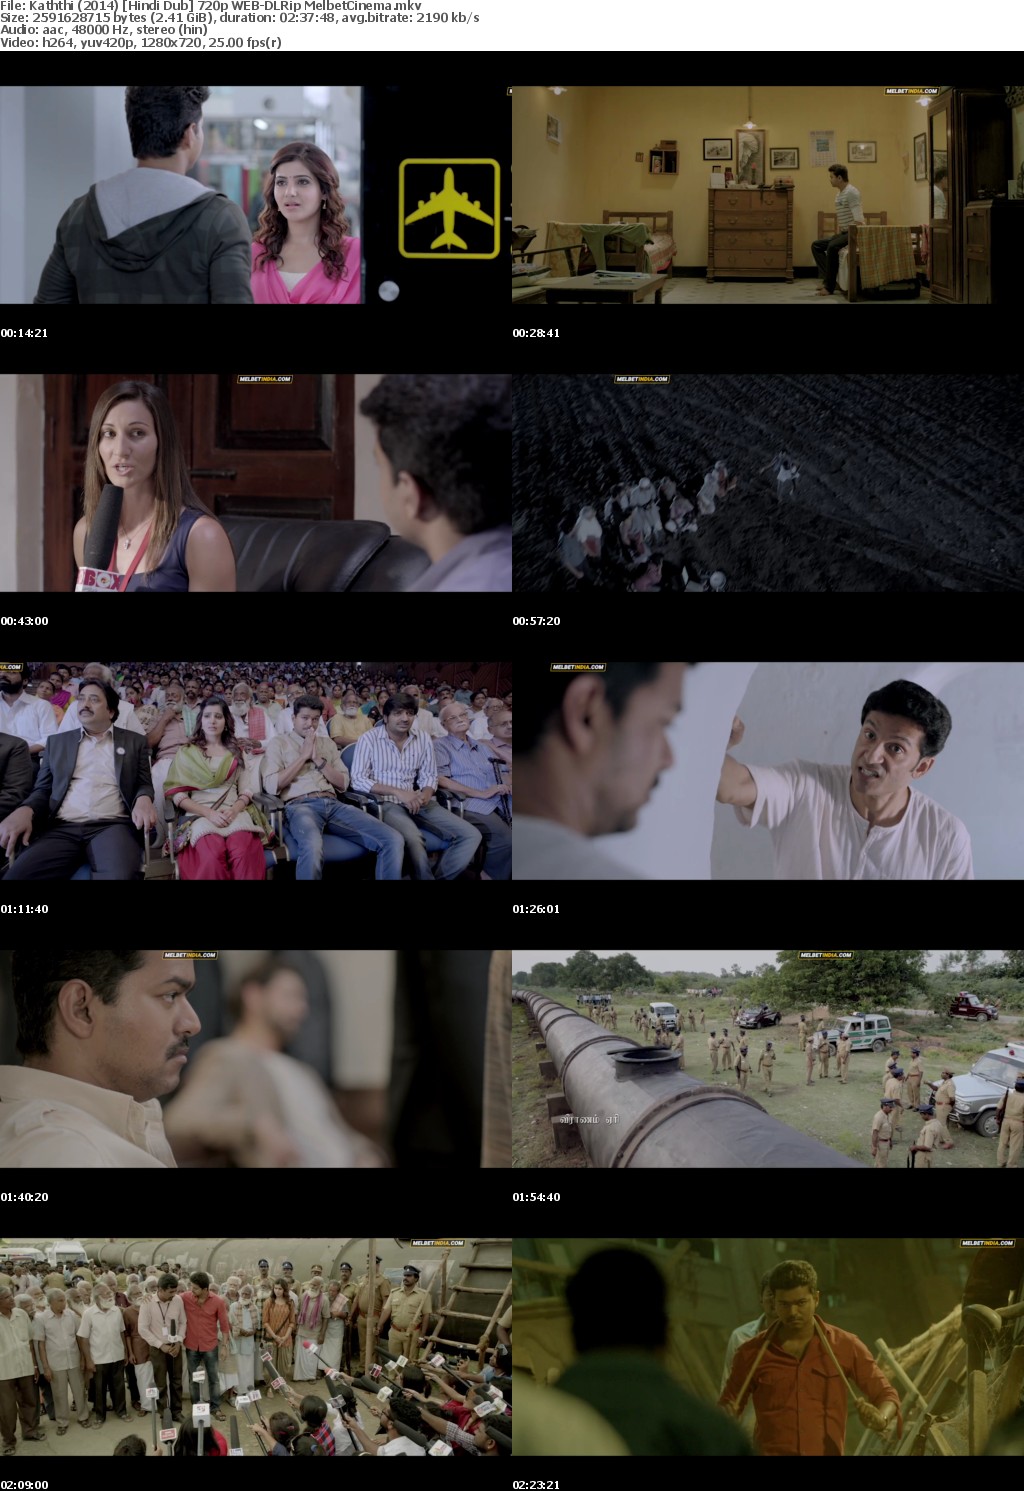 Kaththi (2014) Hindi Dub 720p WEB-DLRip MelbetCinema